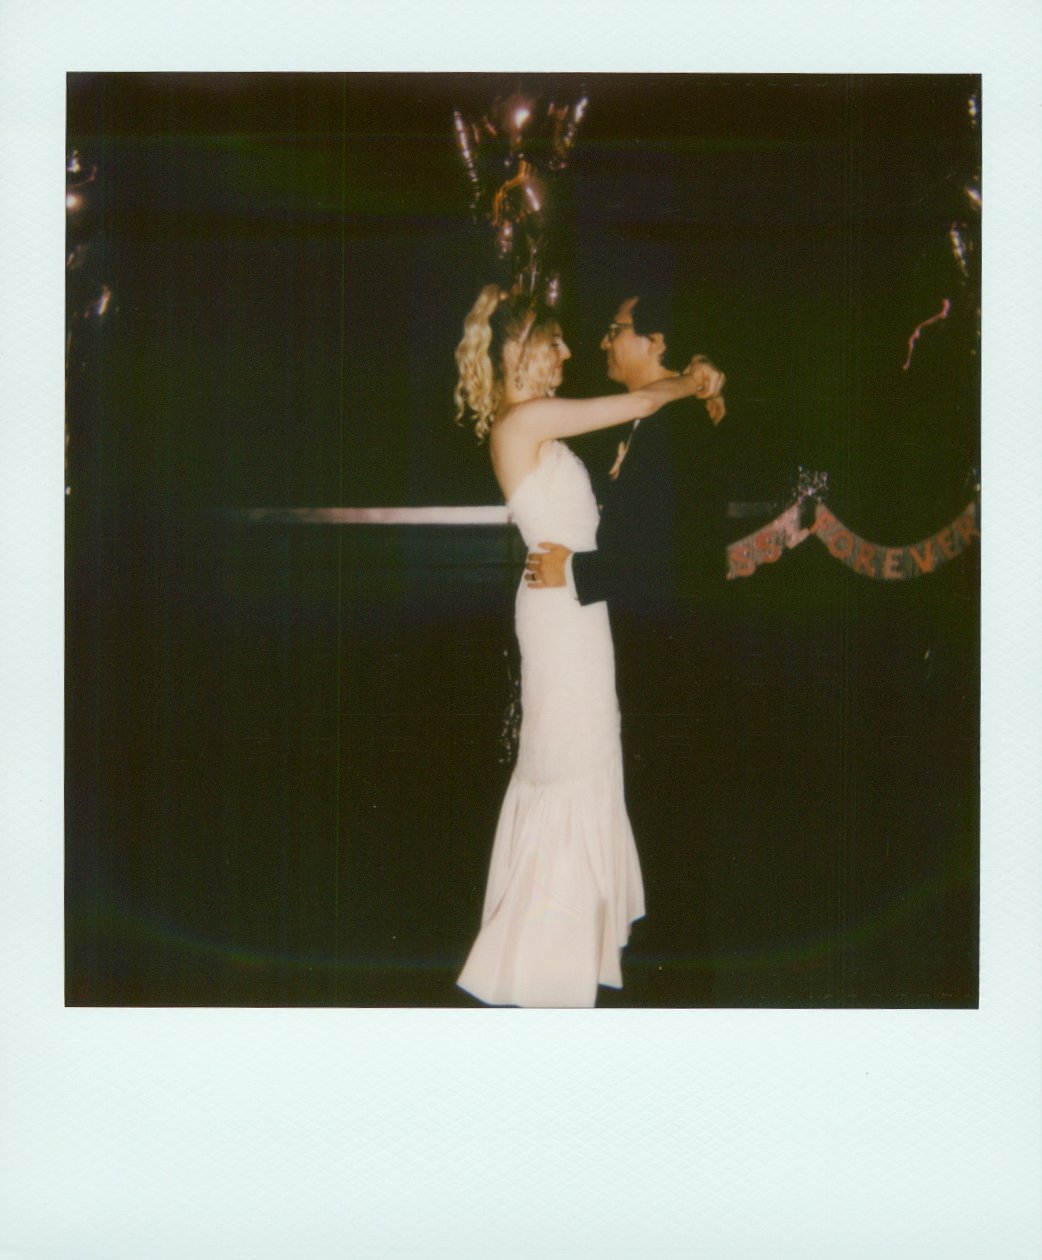 Wedding-taken-on-polaroids5.jpg